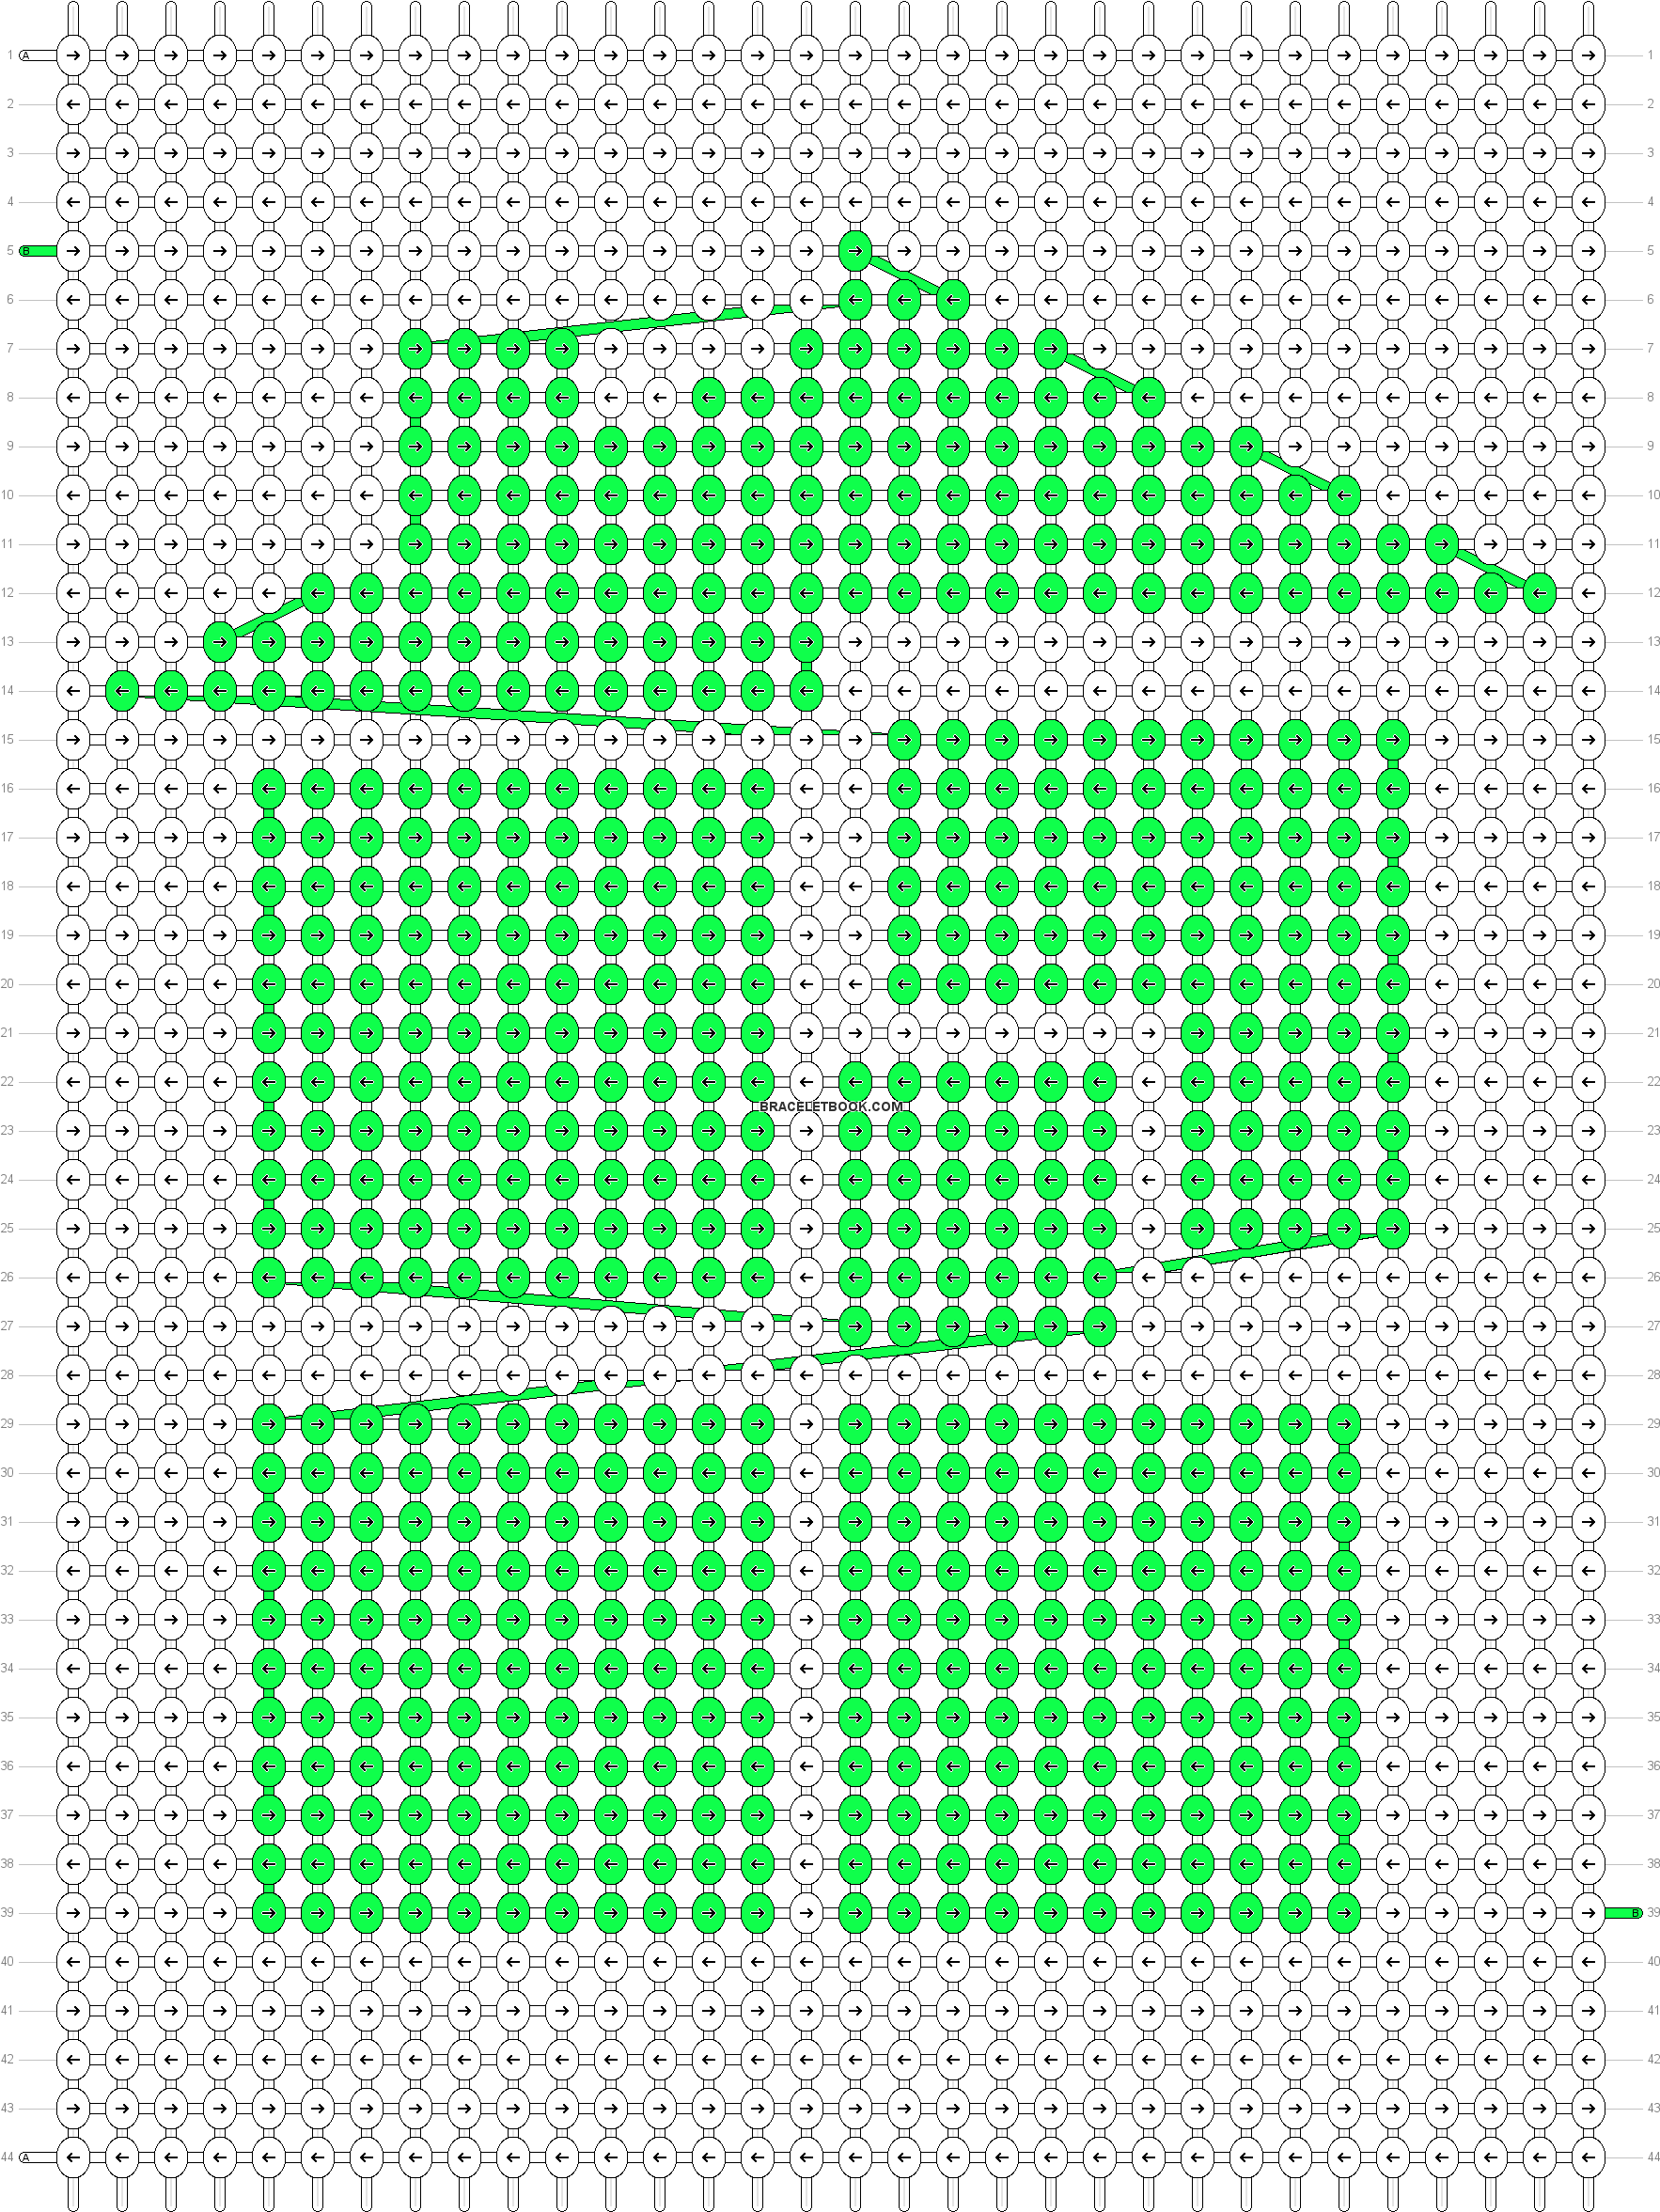 Alpha Pattern - Bts Friendship Bracelet Patterns Clipart (1780x2360), Png Download